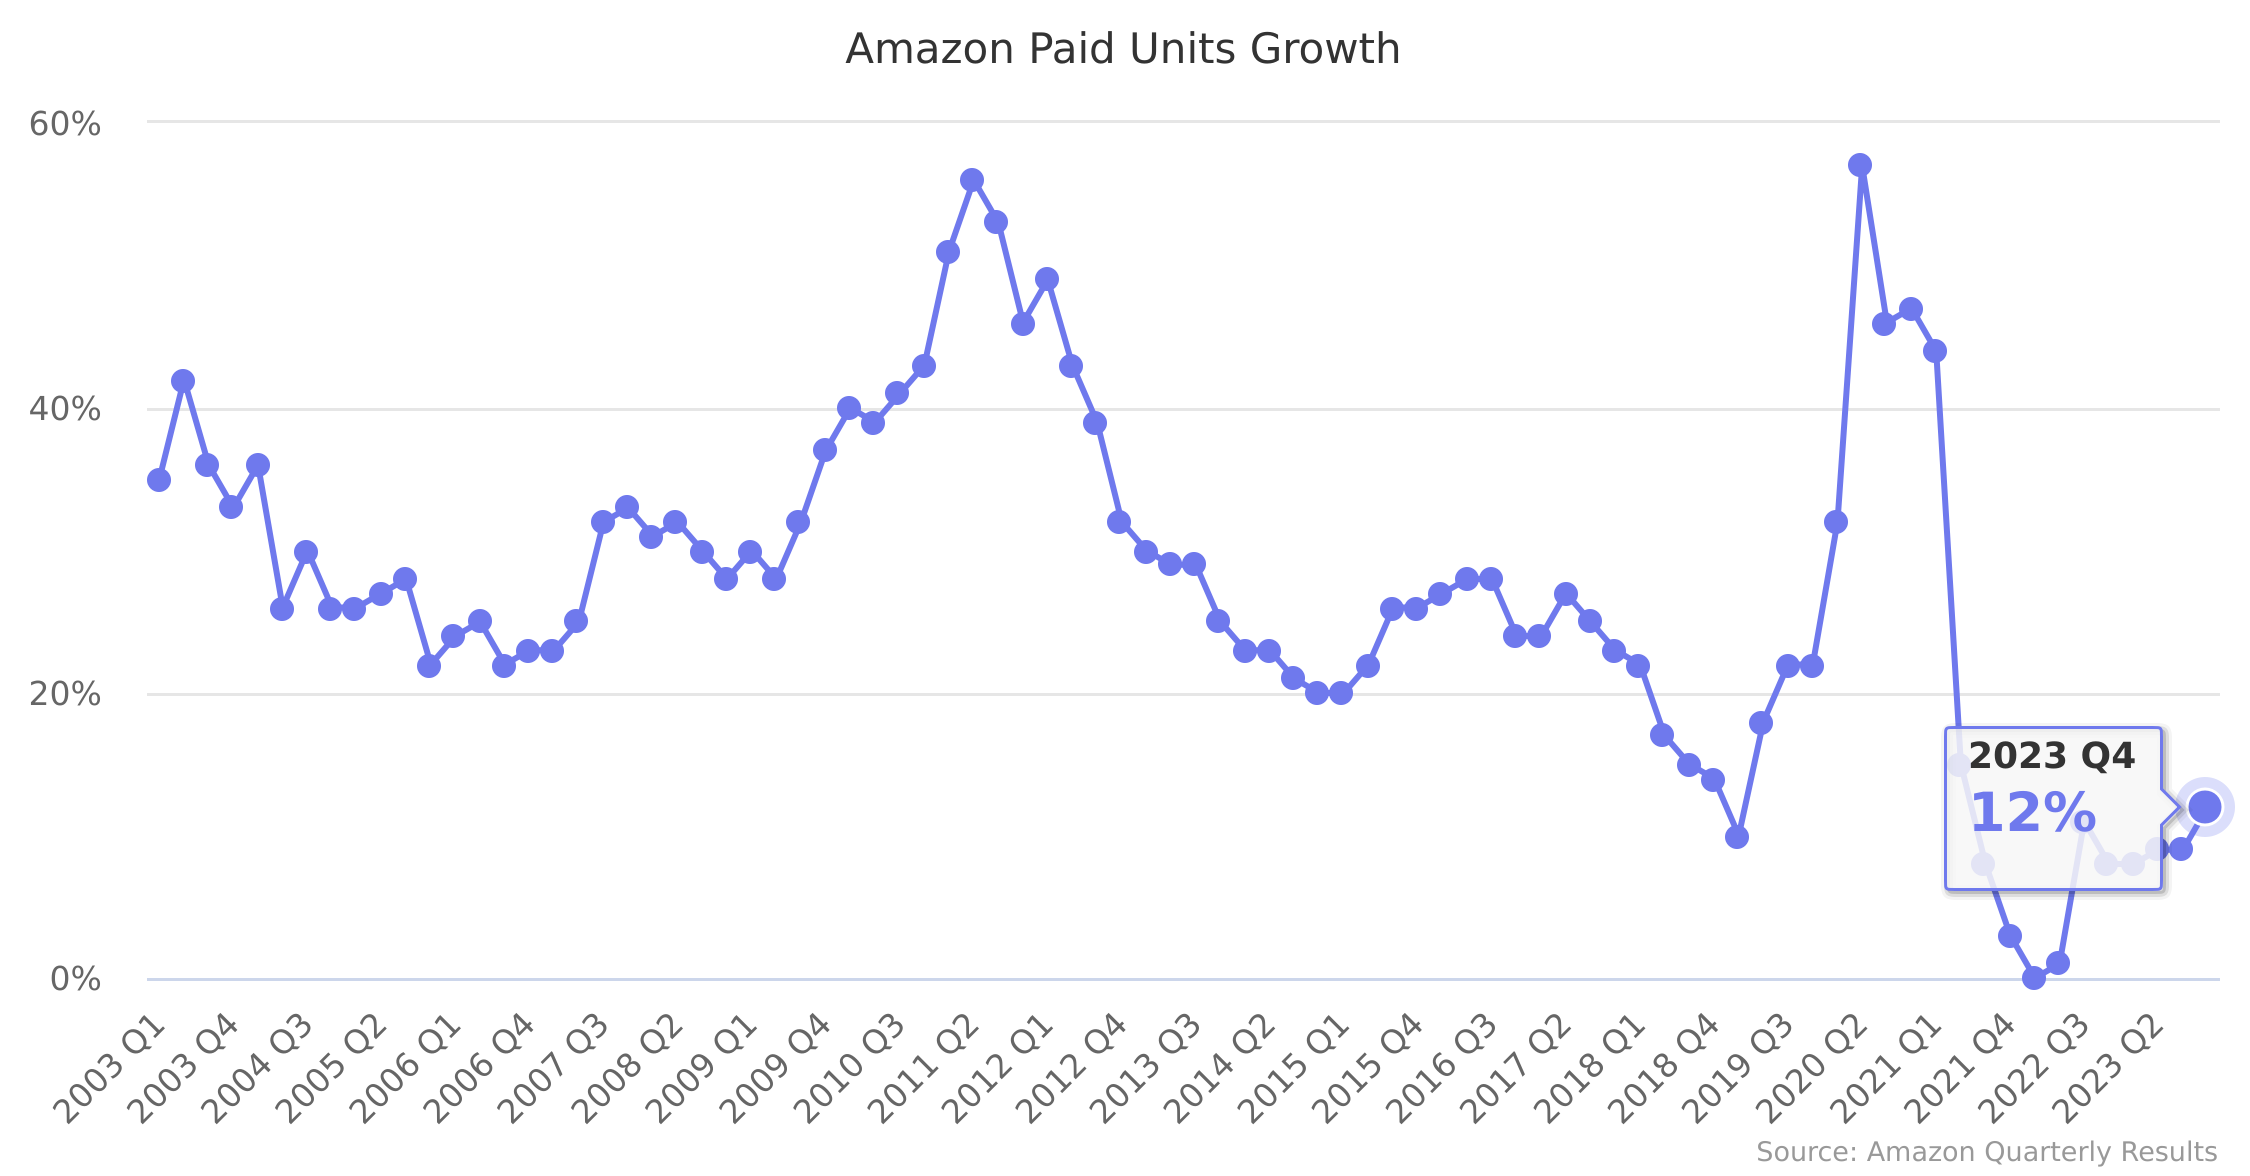 Amazon Paid Units Growth 2003-2023